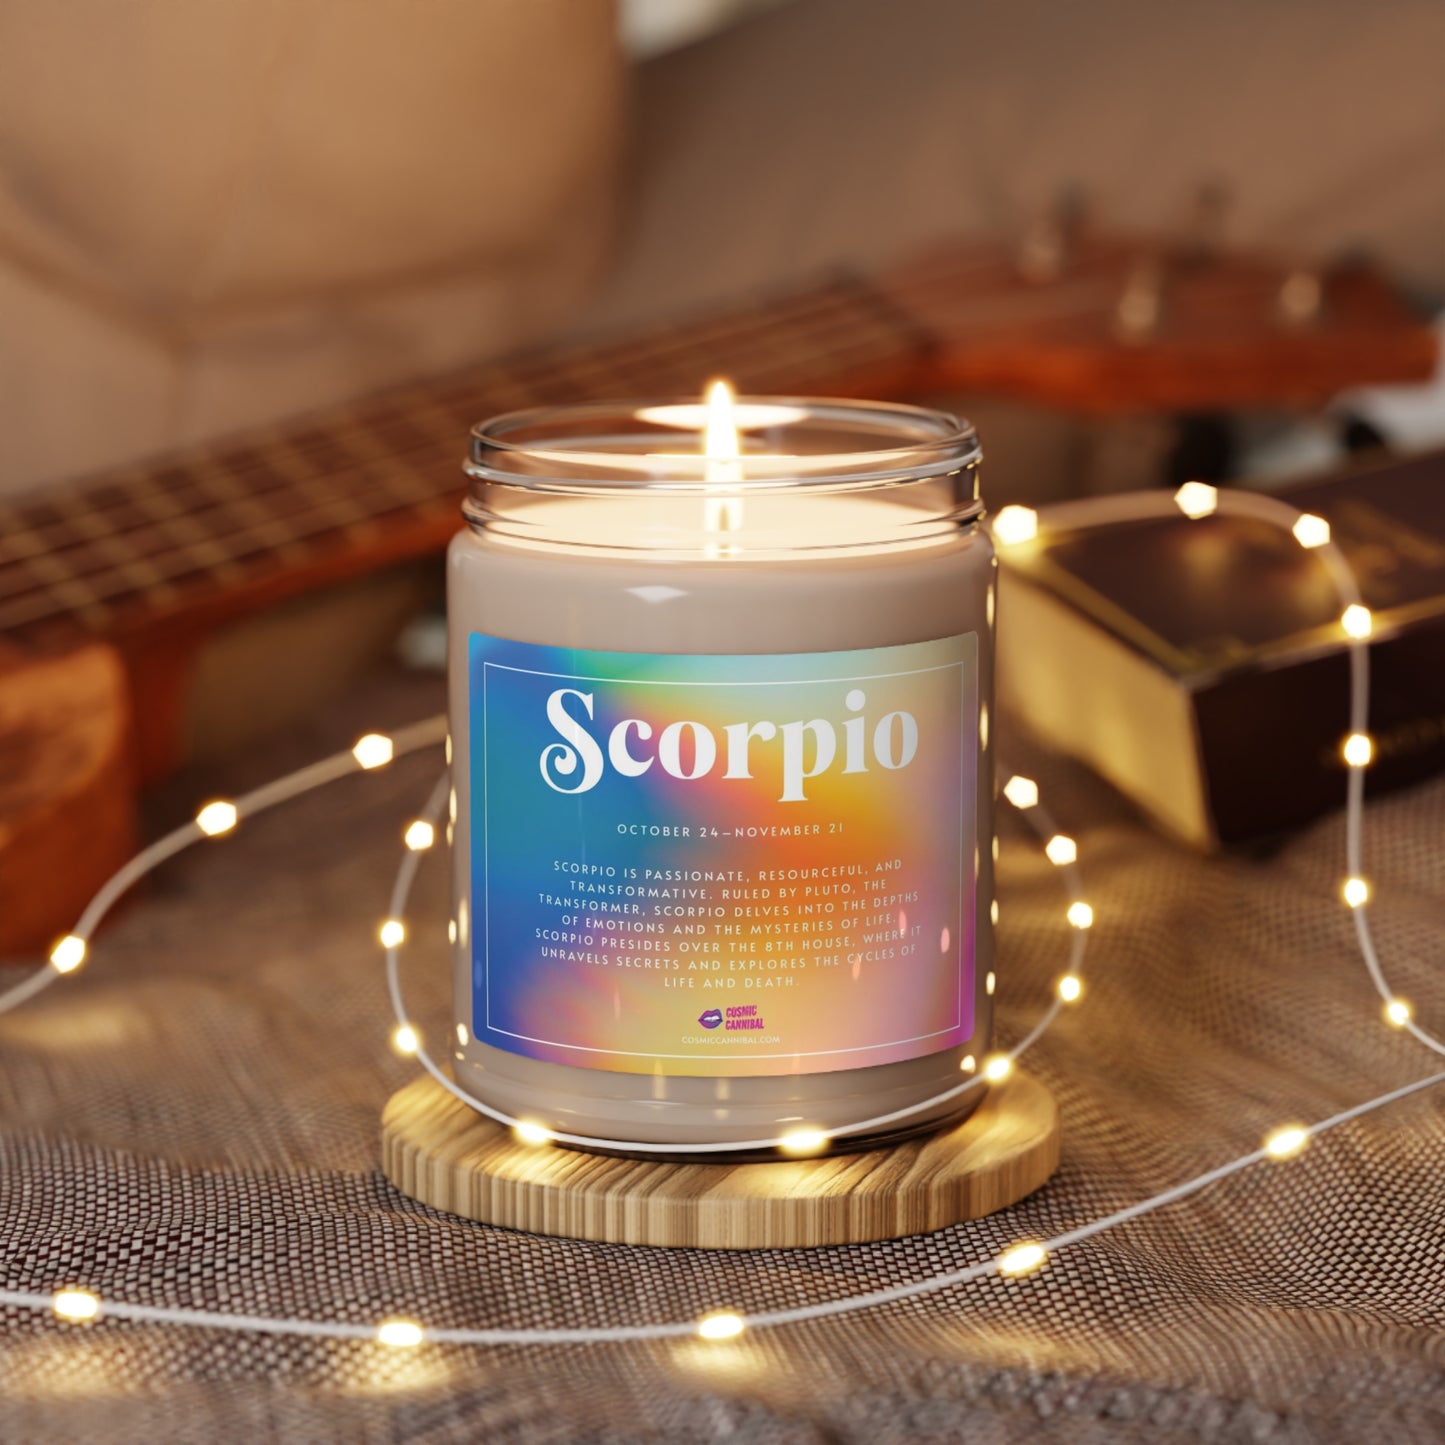 The Scorpio Candle